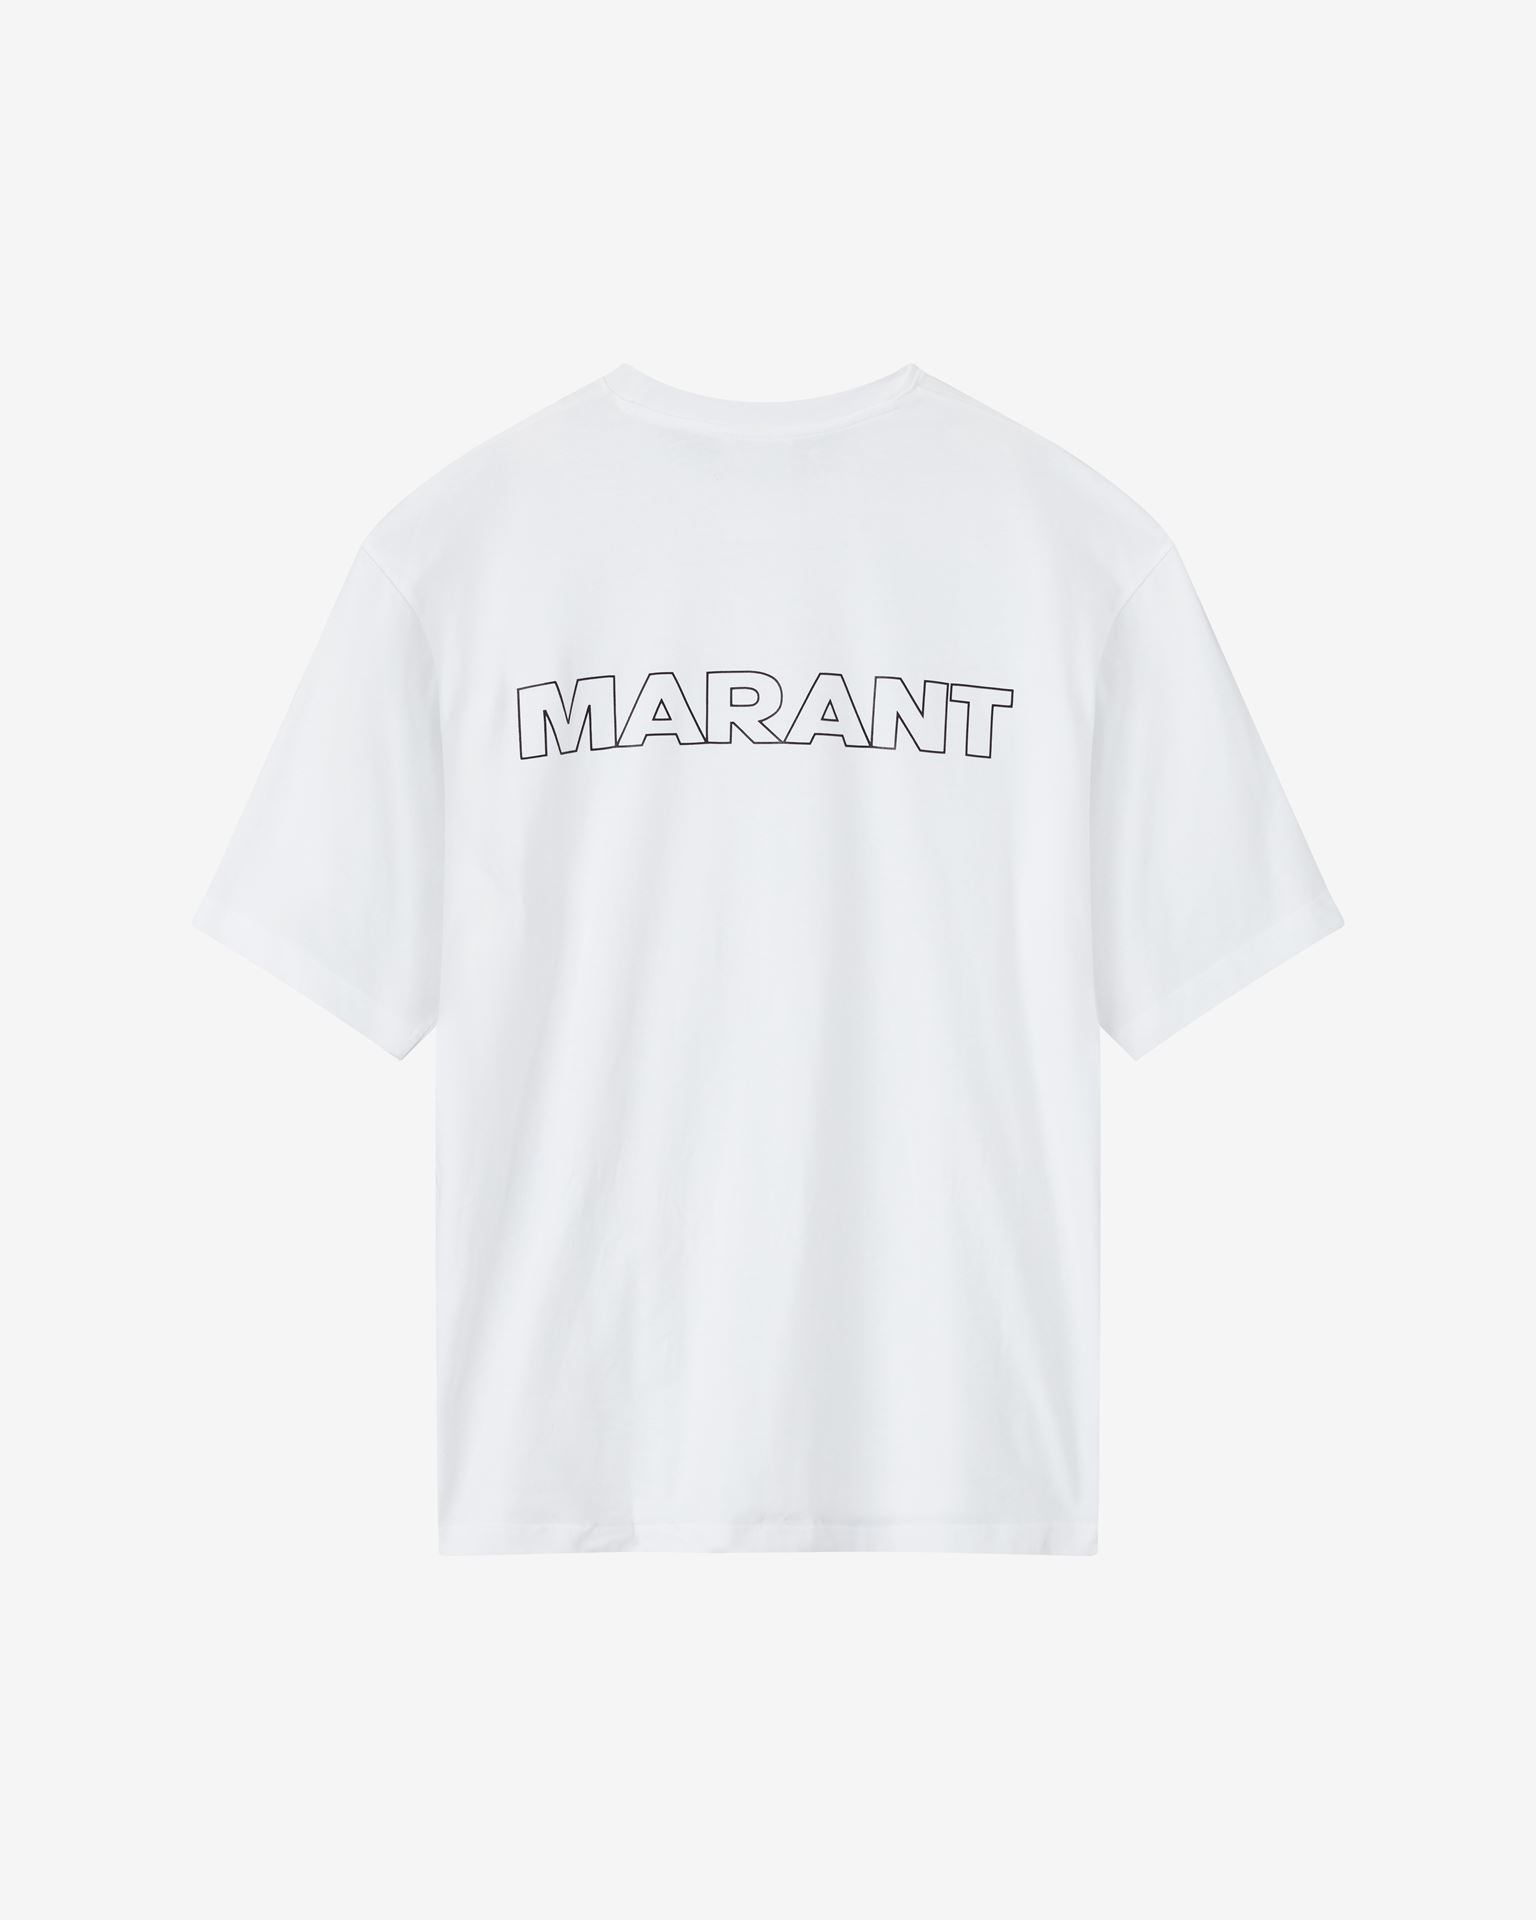 Isabel Marant, Guizy marant Cotton Tee-shirt - Men - Black